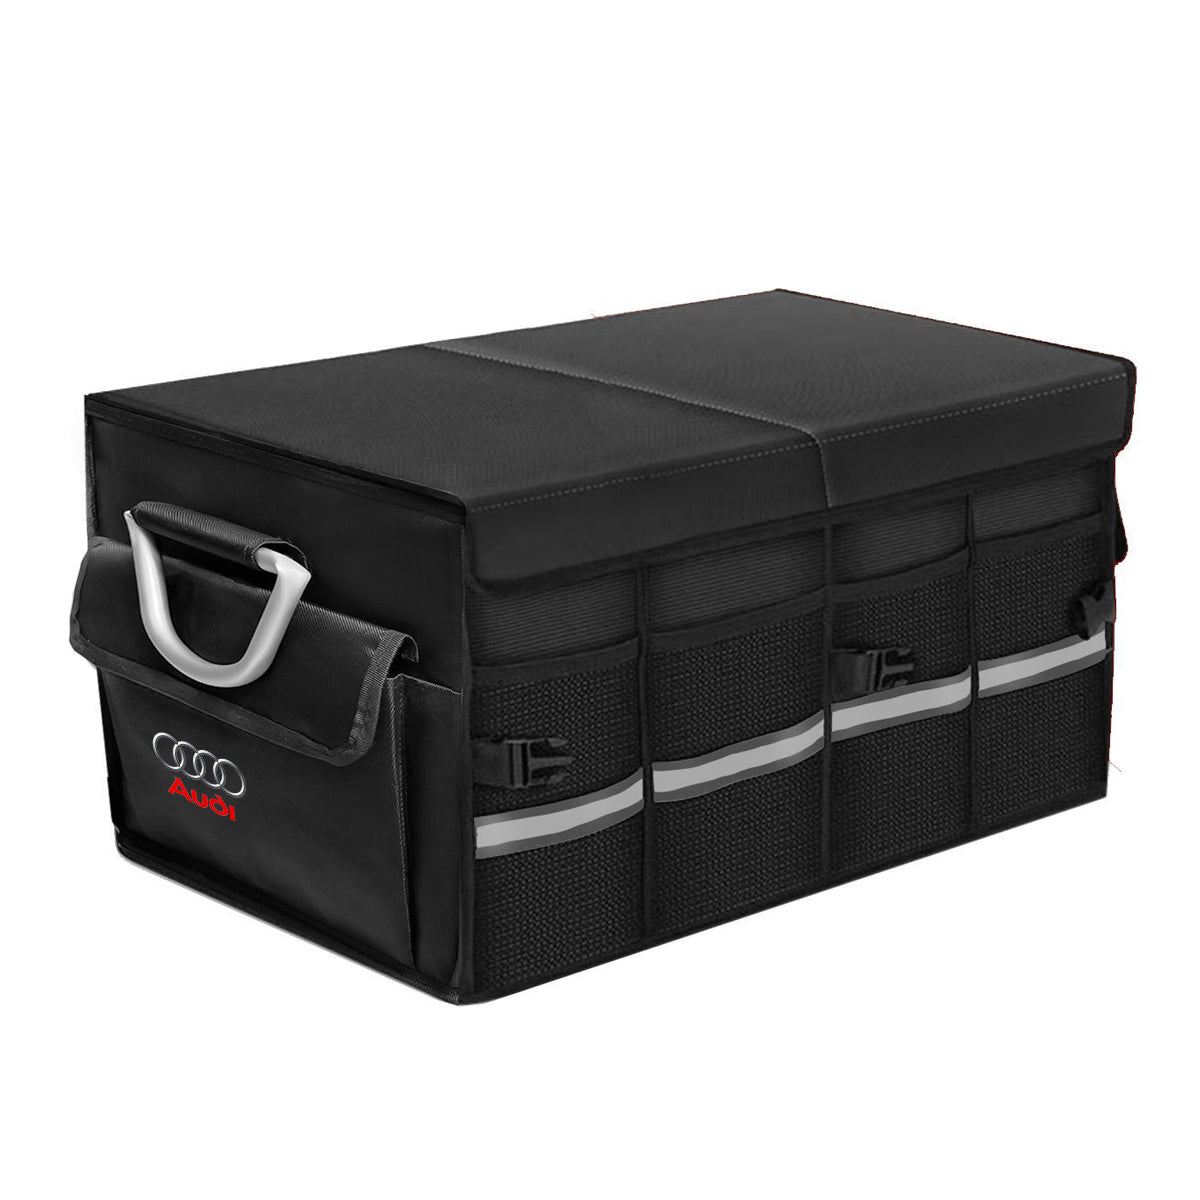 Audi Organizer For Car Trunk Box Storage, Car Accessories